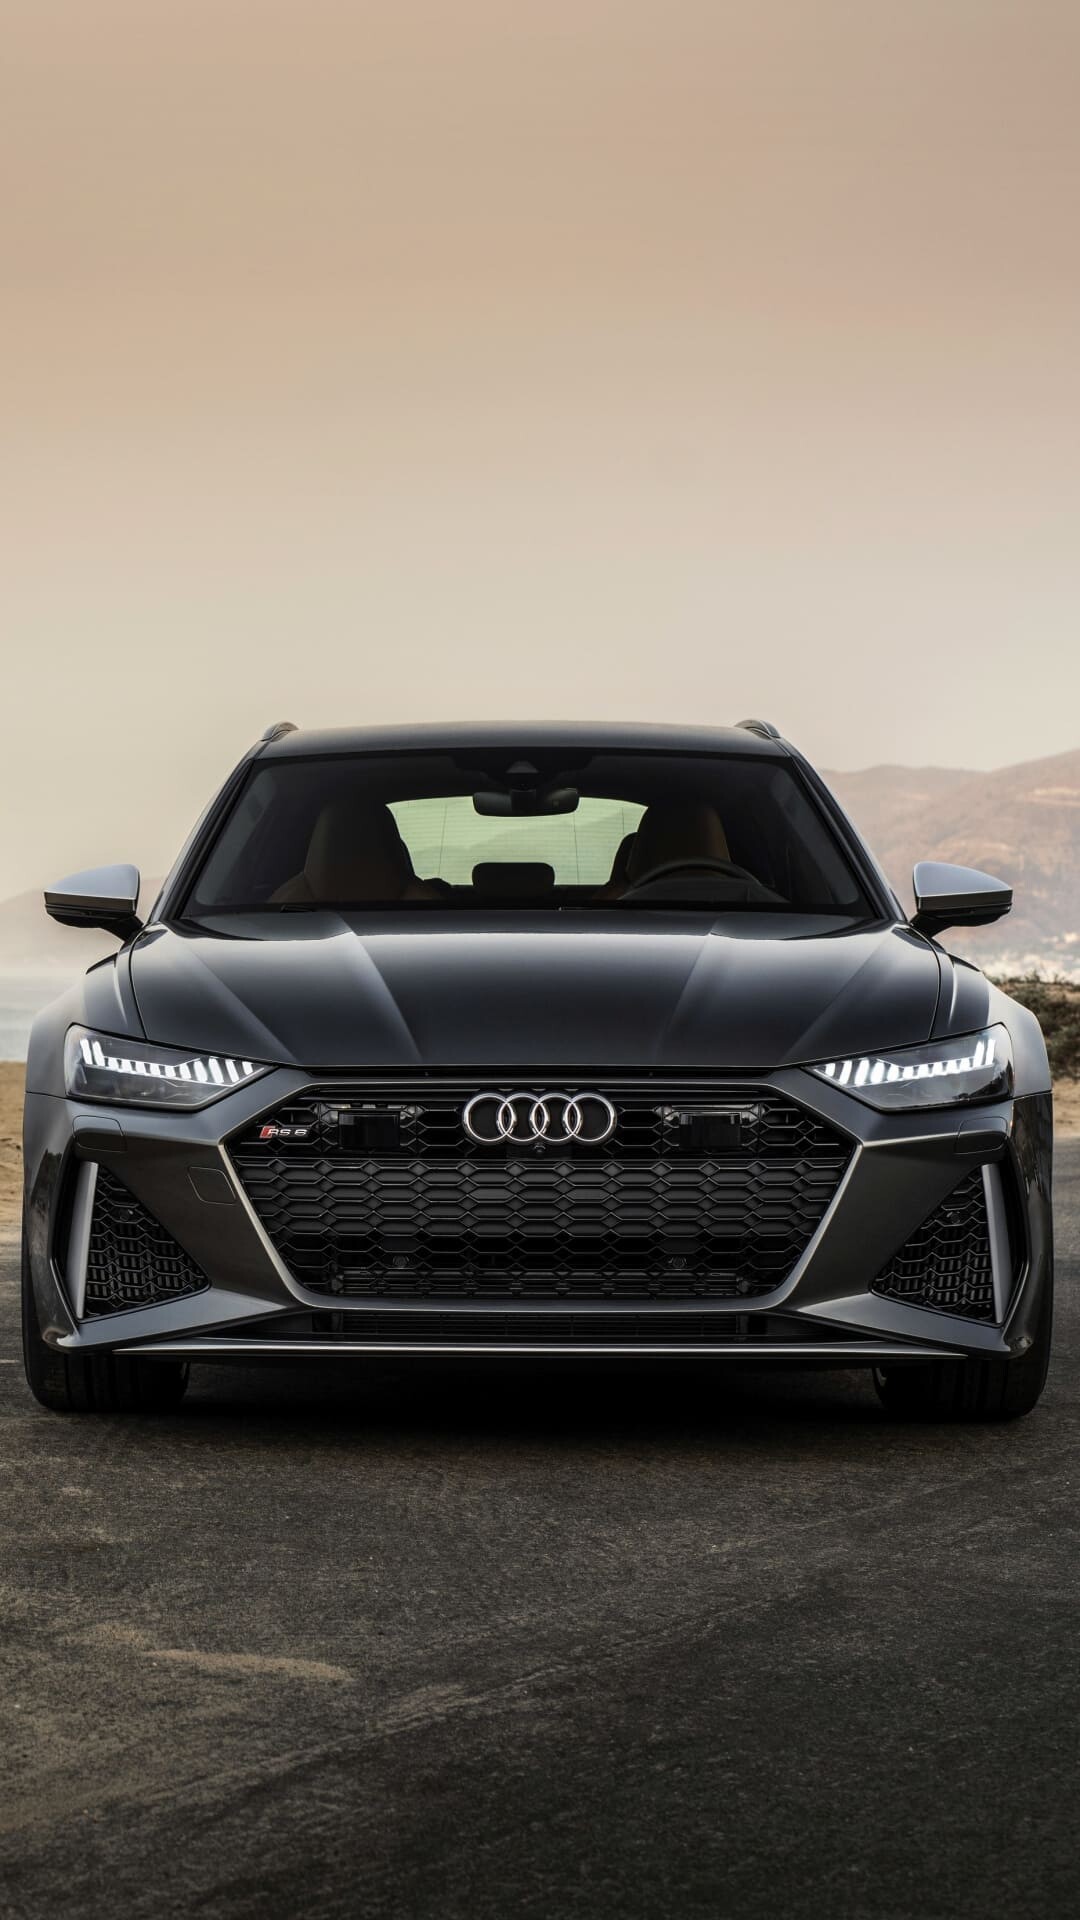 Audi: German luxury car brand, Vehicle. 1080x1920 Full HD Wallpaper.